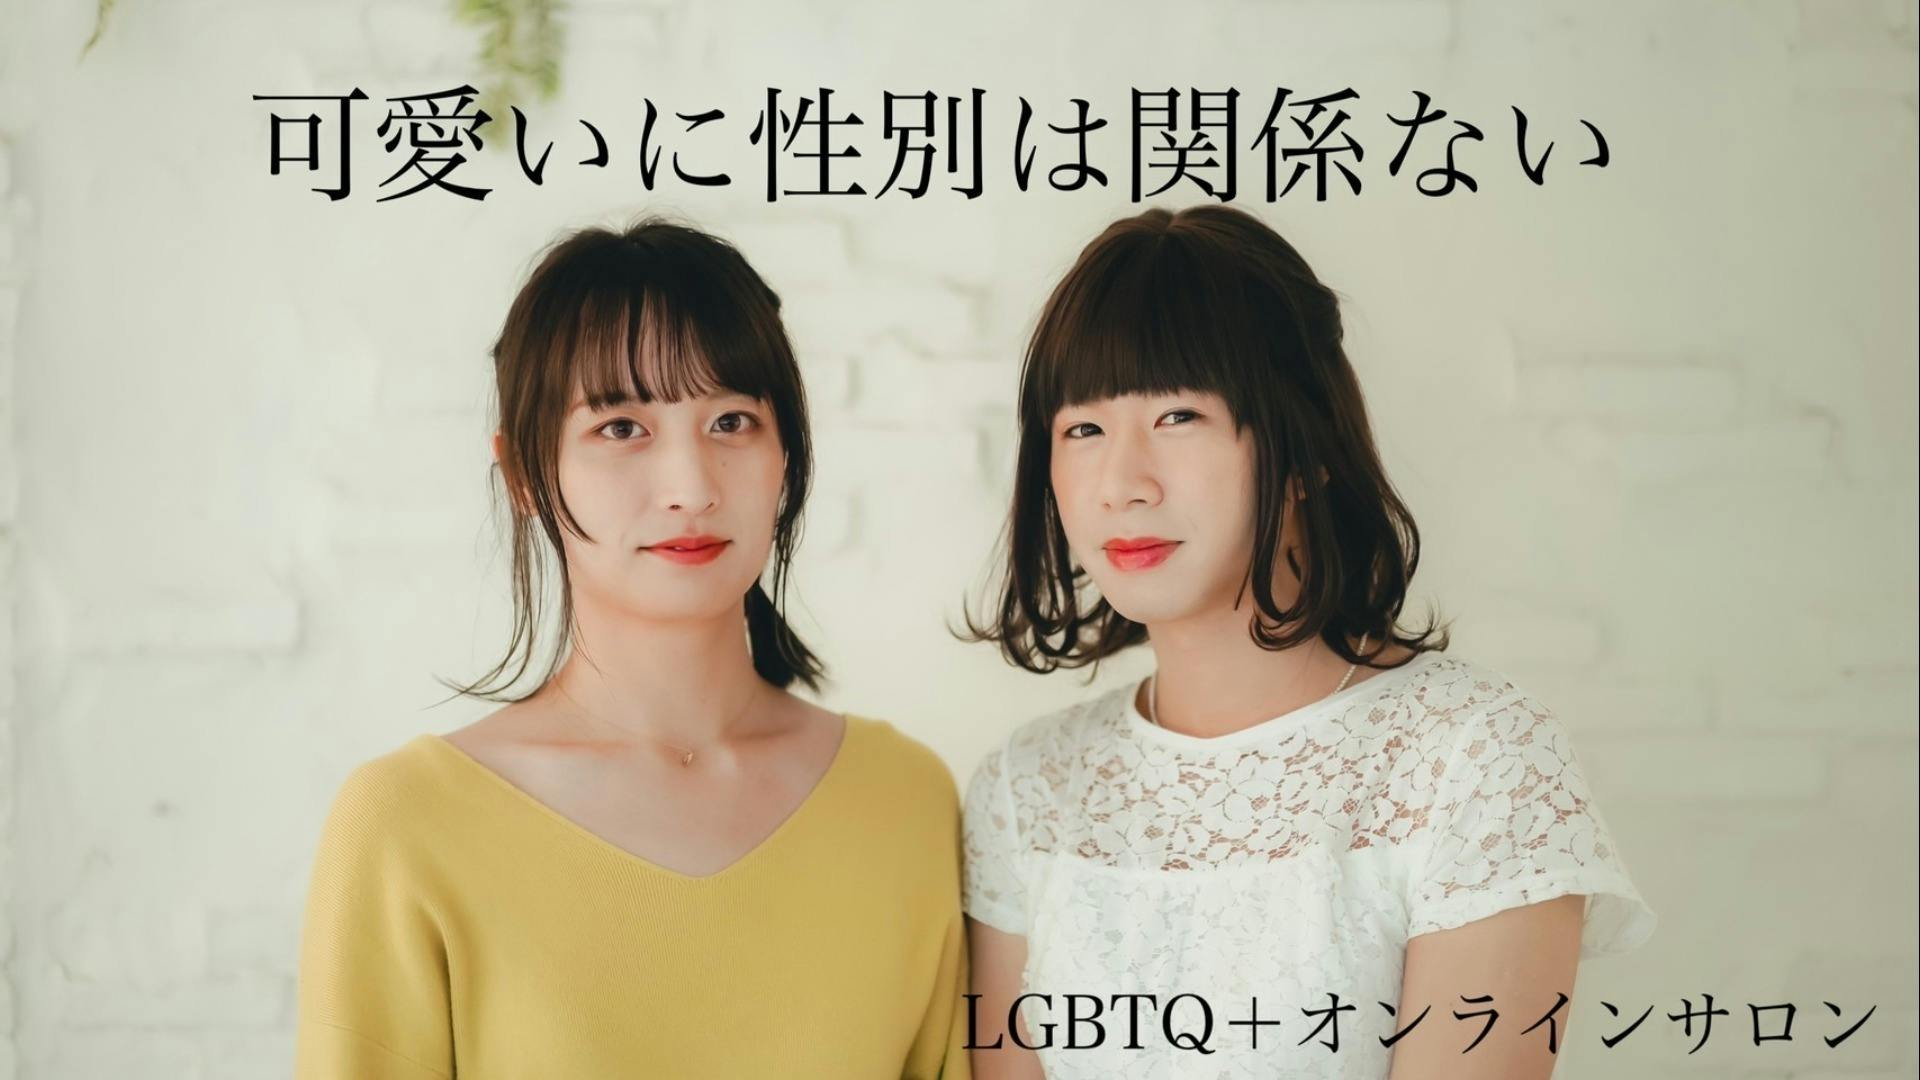 MISAKI - LGBTQ+会員制サロン"Collabo" - DMMオンラインサロン